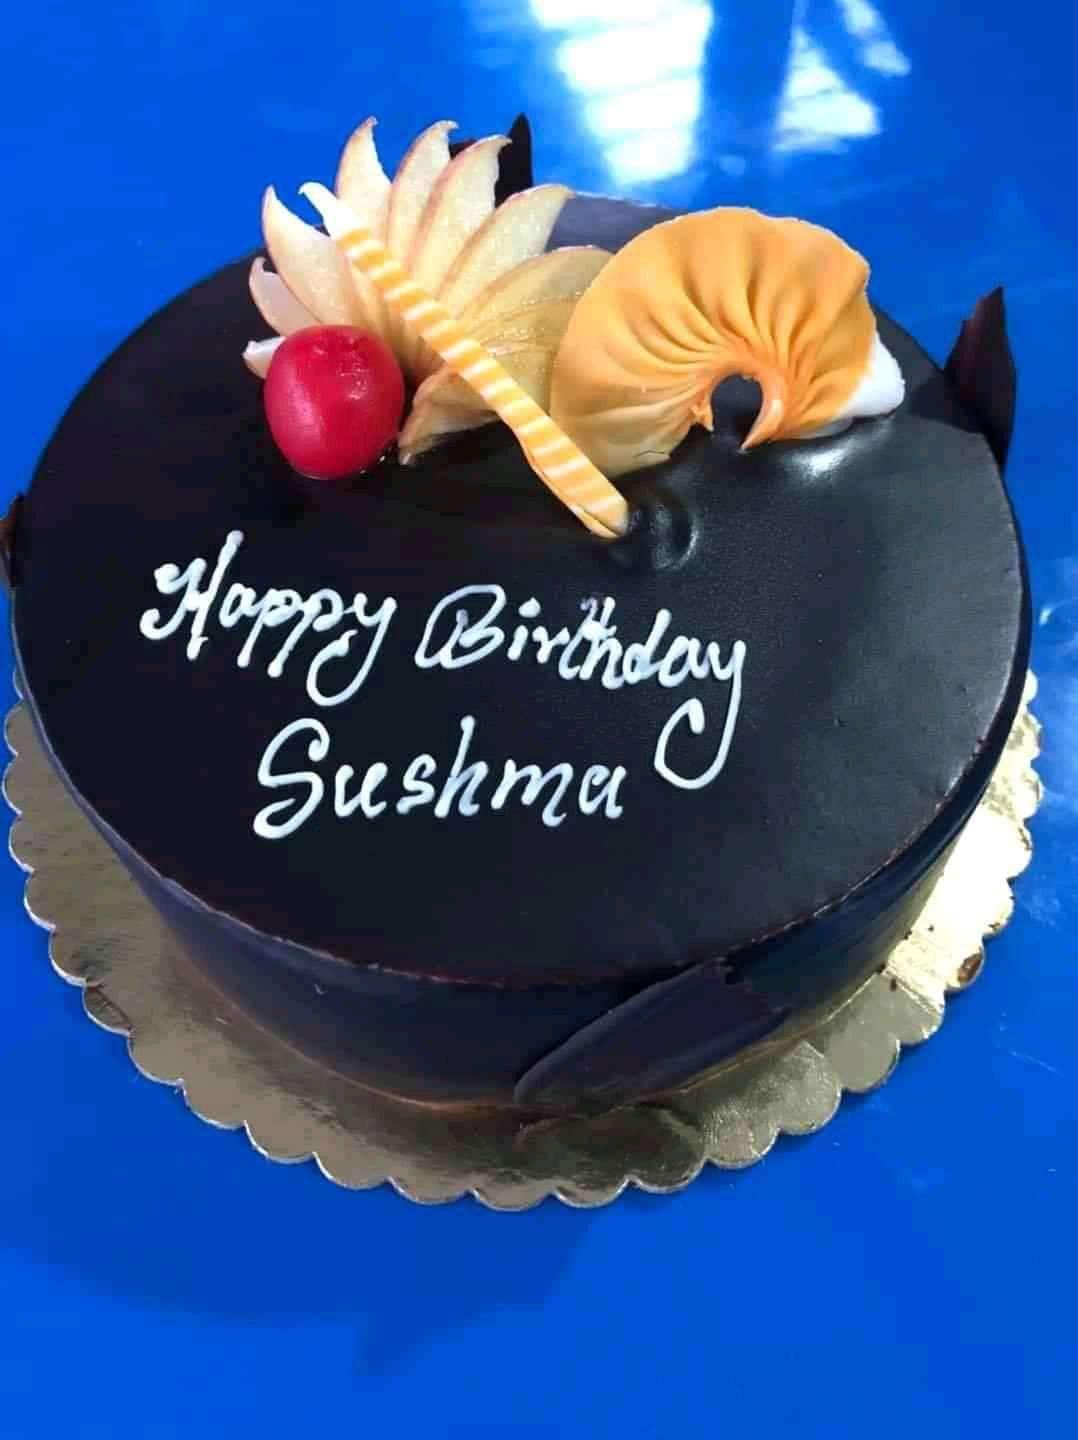 Creativity With Sushma - Birthday Cake for my son's 14th birthday! |  Facebook